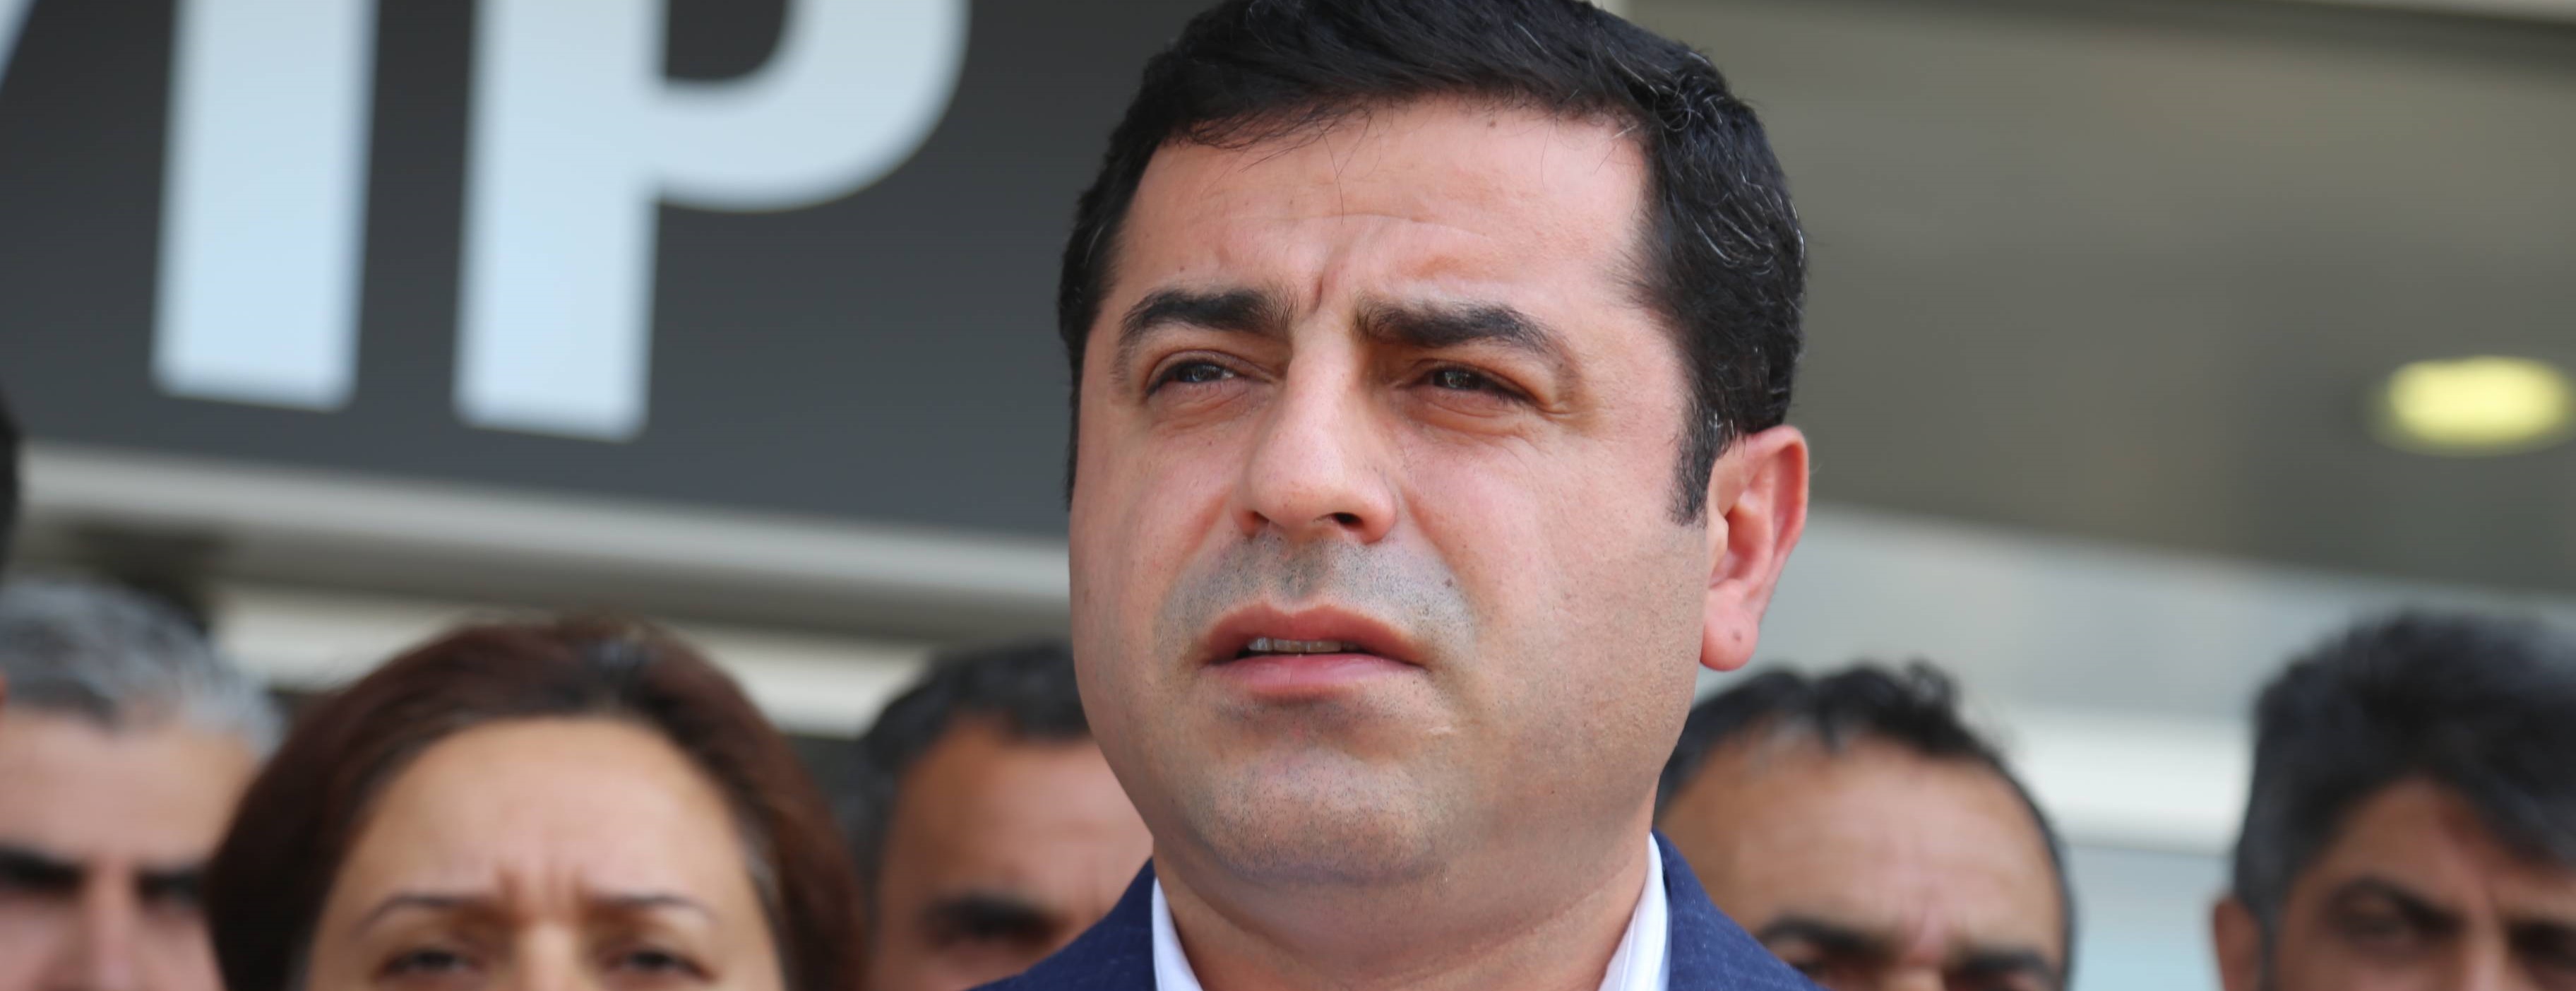 Our co-Chair Mr. Selahattin Demirtas’ speech on the massacre in Gaziantep